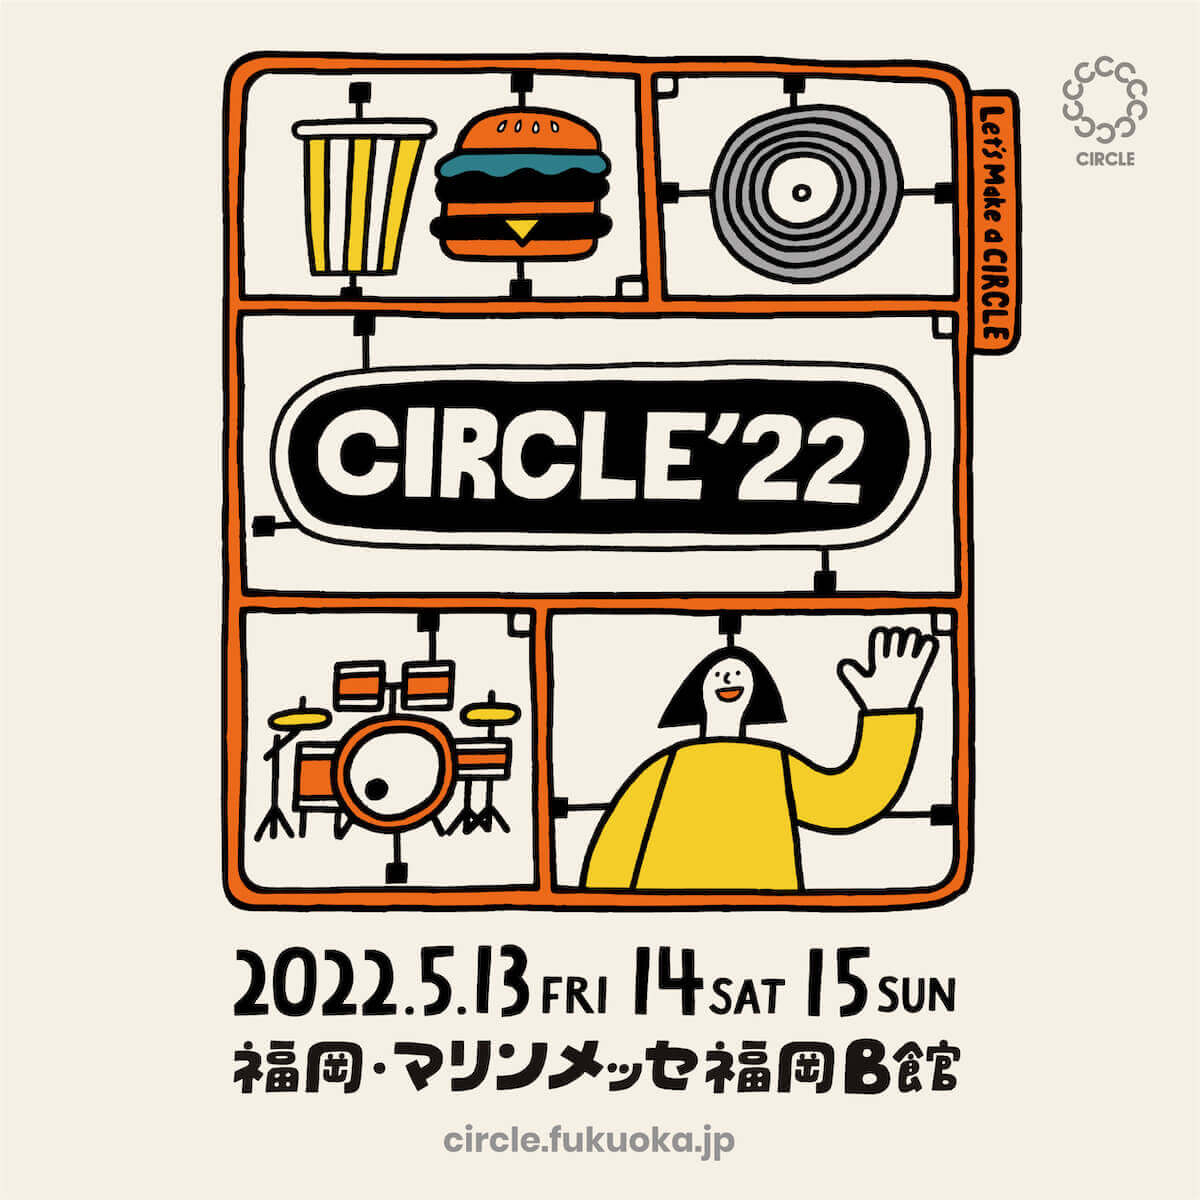 CIRCLEが3年ぶりに福岡で開催決定！